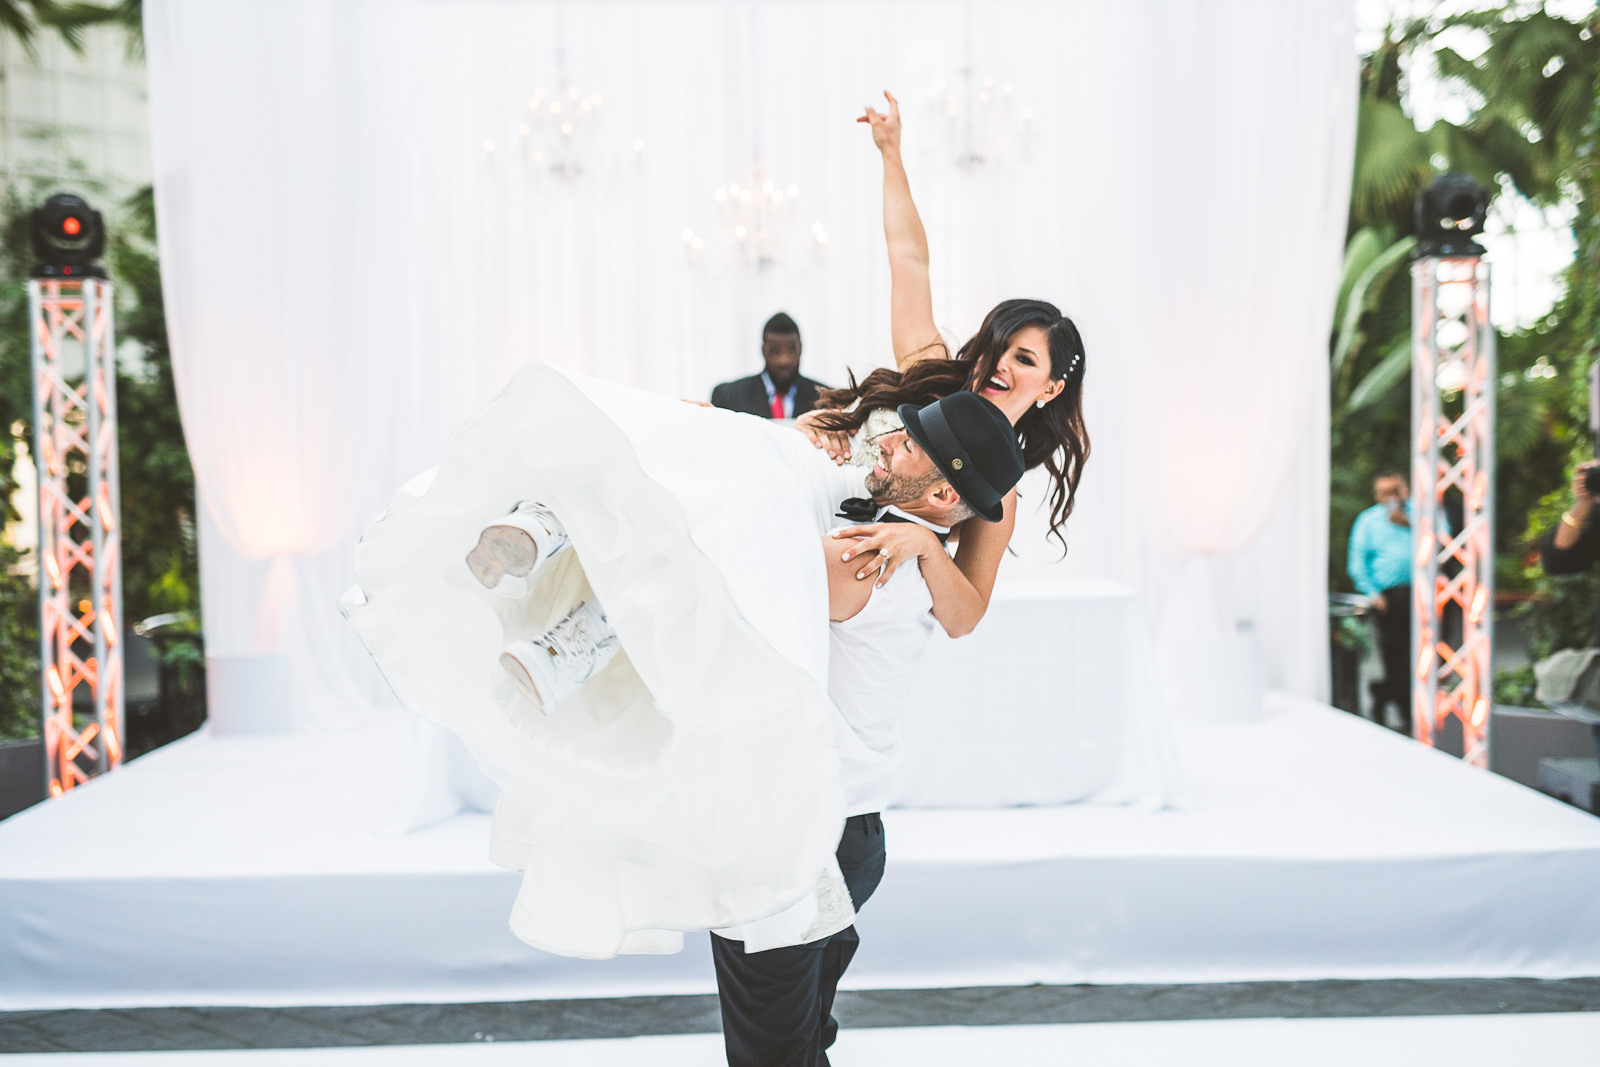 89 holding bride during dance - Marisa + Chris // Chicago Wedding Photos at Navy Pier Crystal Garden